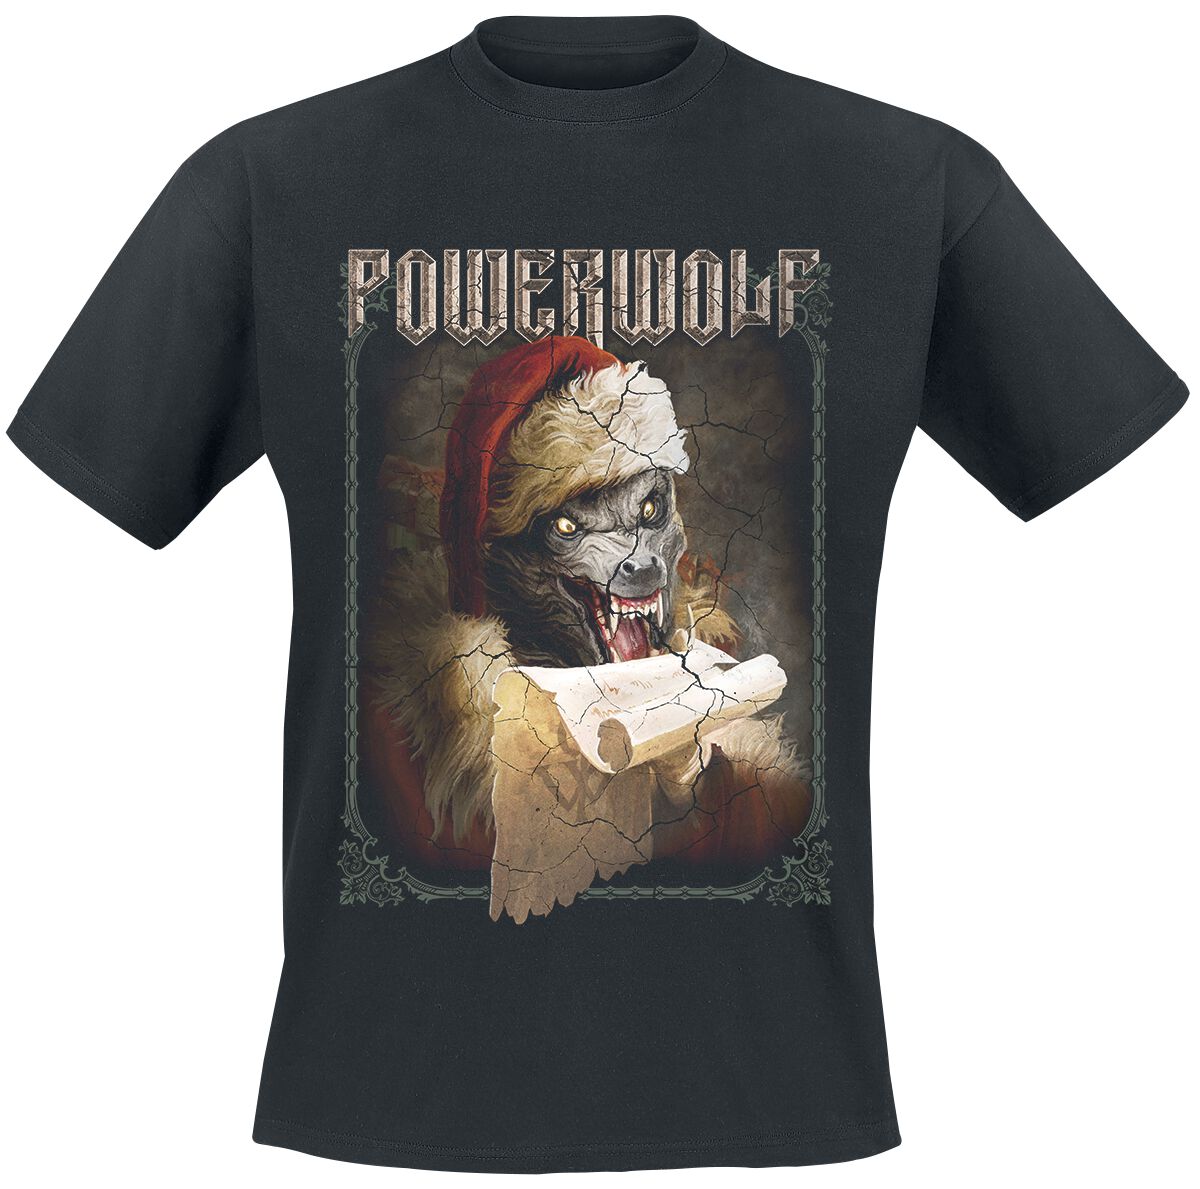 Powerwolf Wild Christmas T-Shirt black